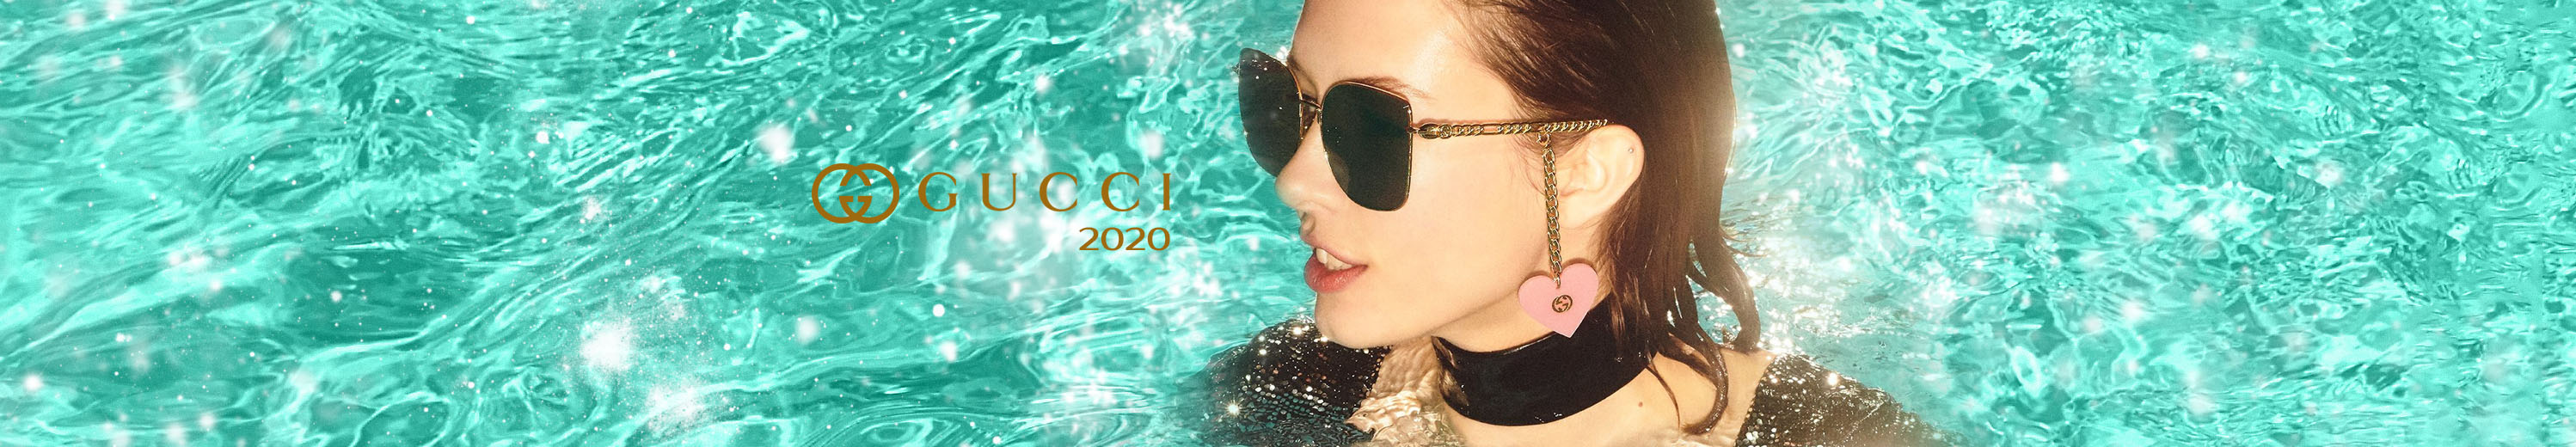 Gucci 2020 Eyewear Collection